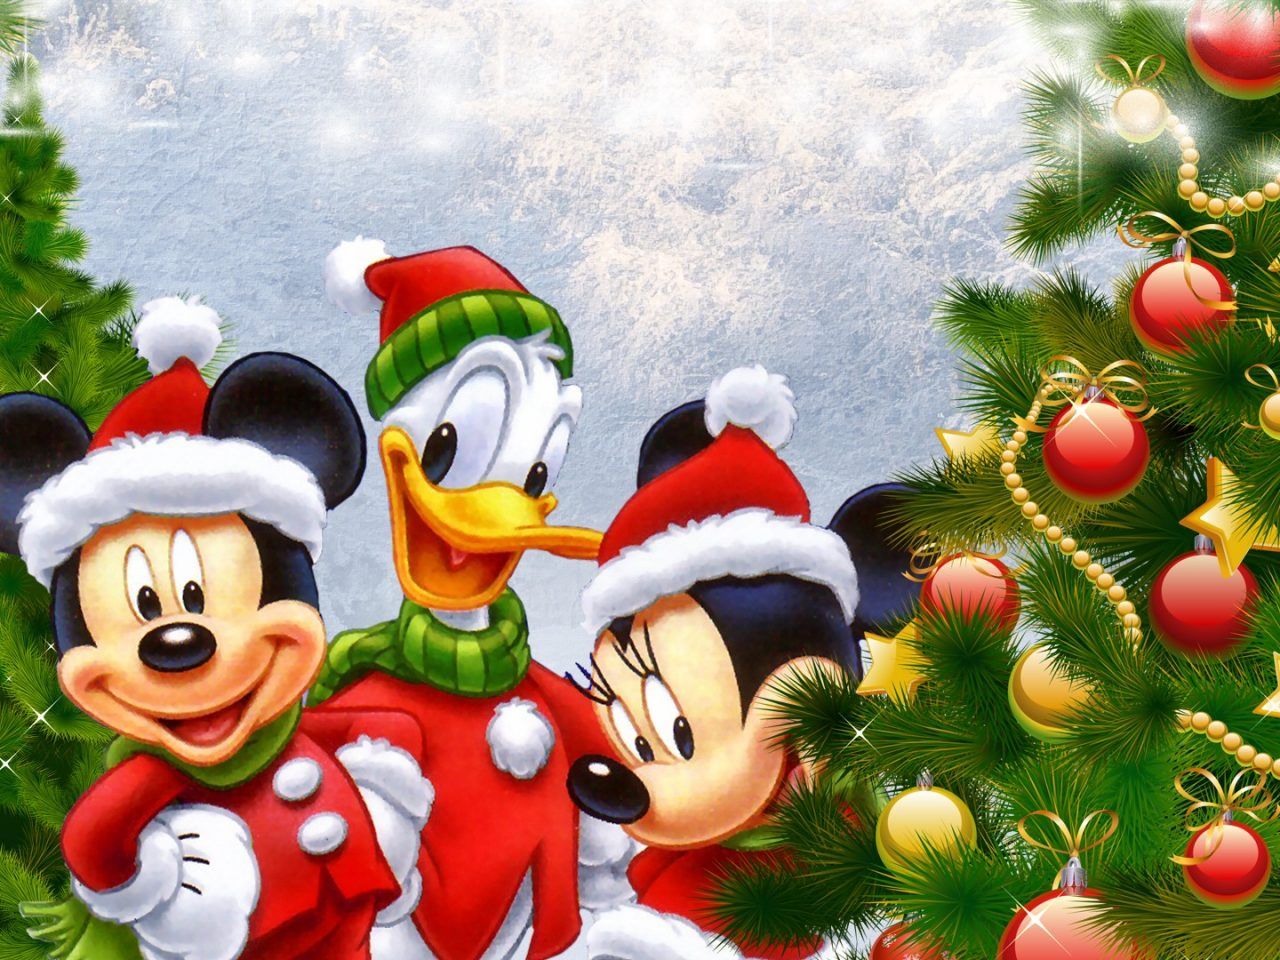 Disney Donald Duck Mickey And Minnie Mouse Christmas Tree Desktop Wallpaper HD 1920x1080, Wallpaper13.com